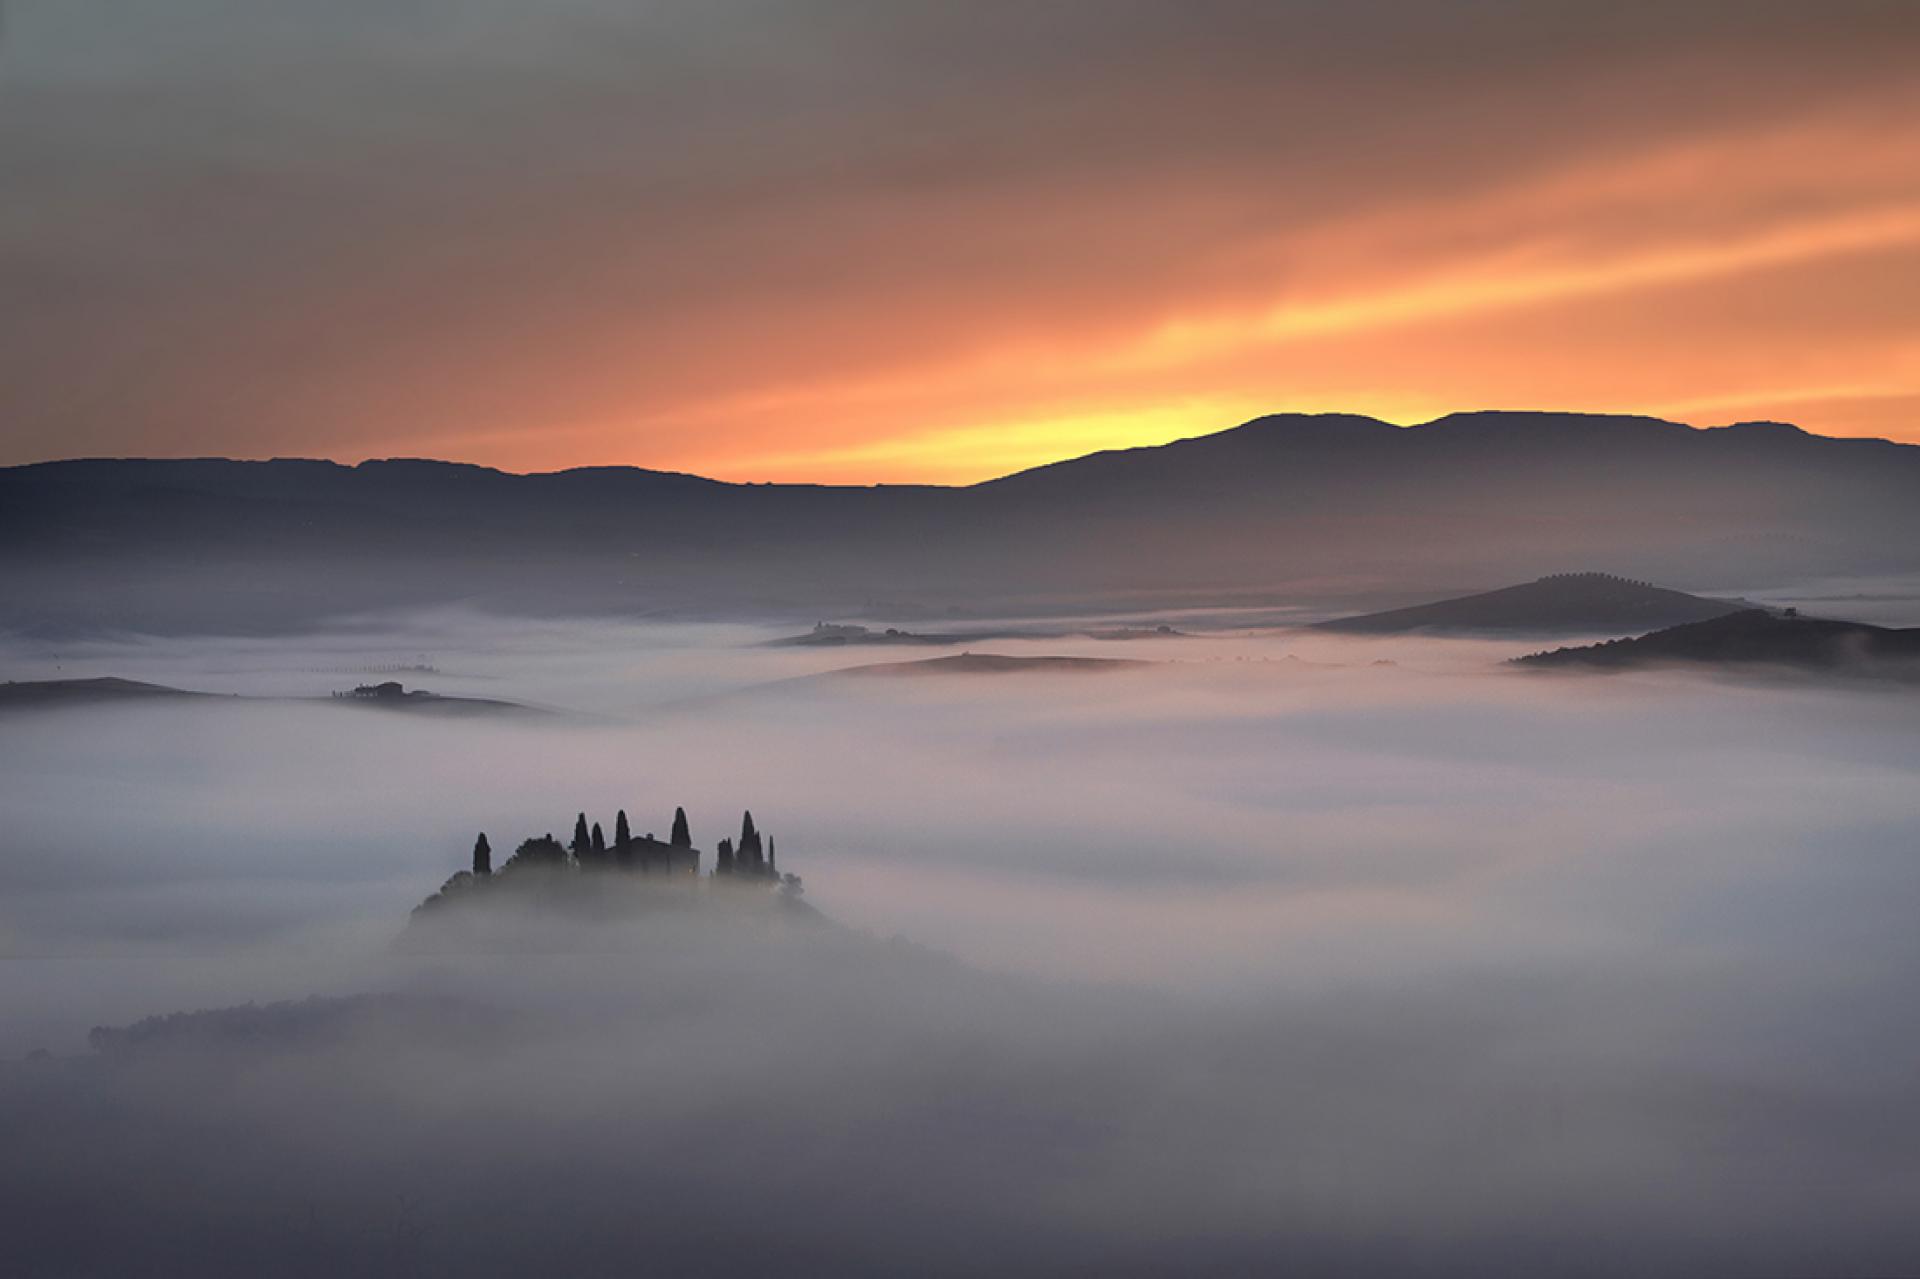 New York Photography Awards Winner - Tuscany farm among the fog